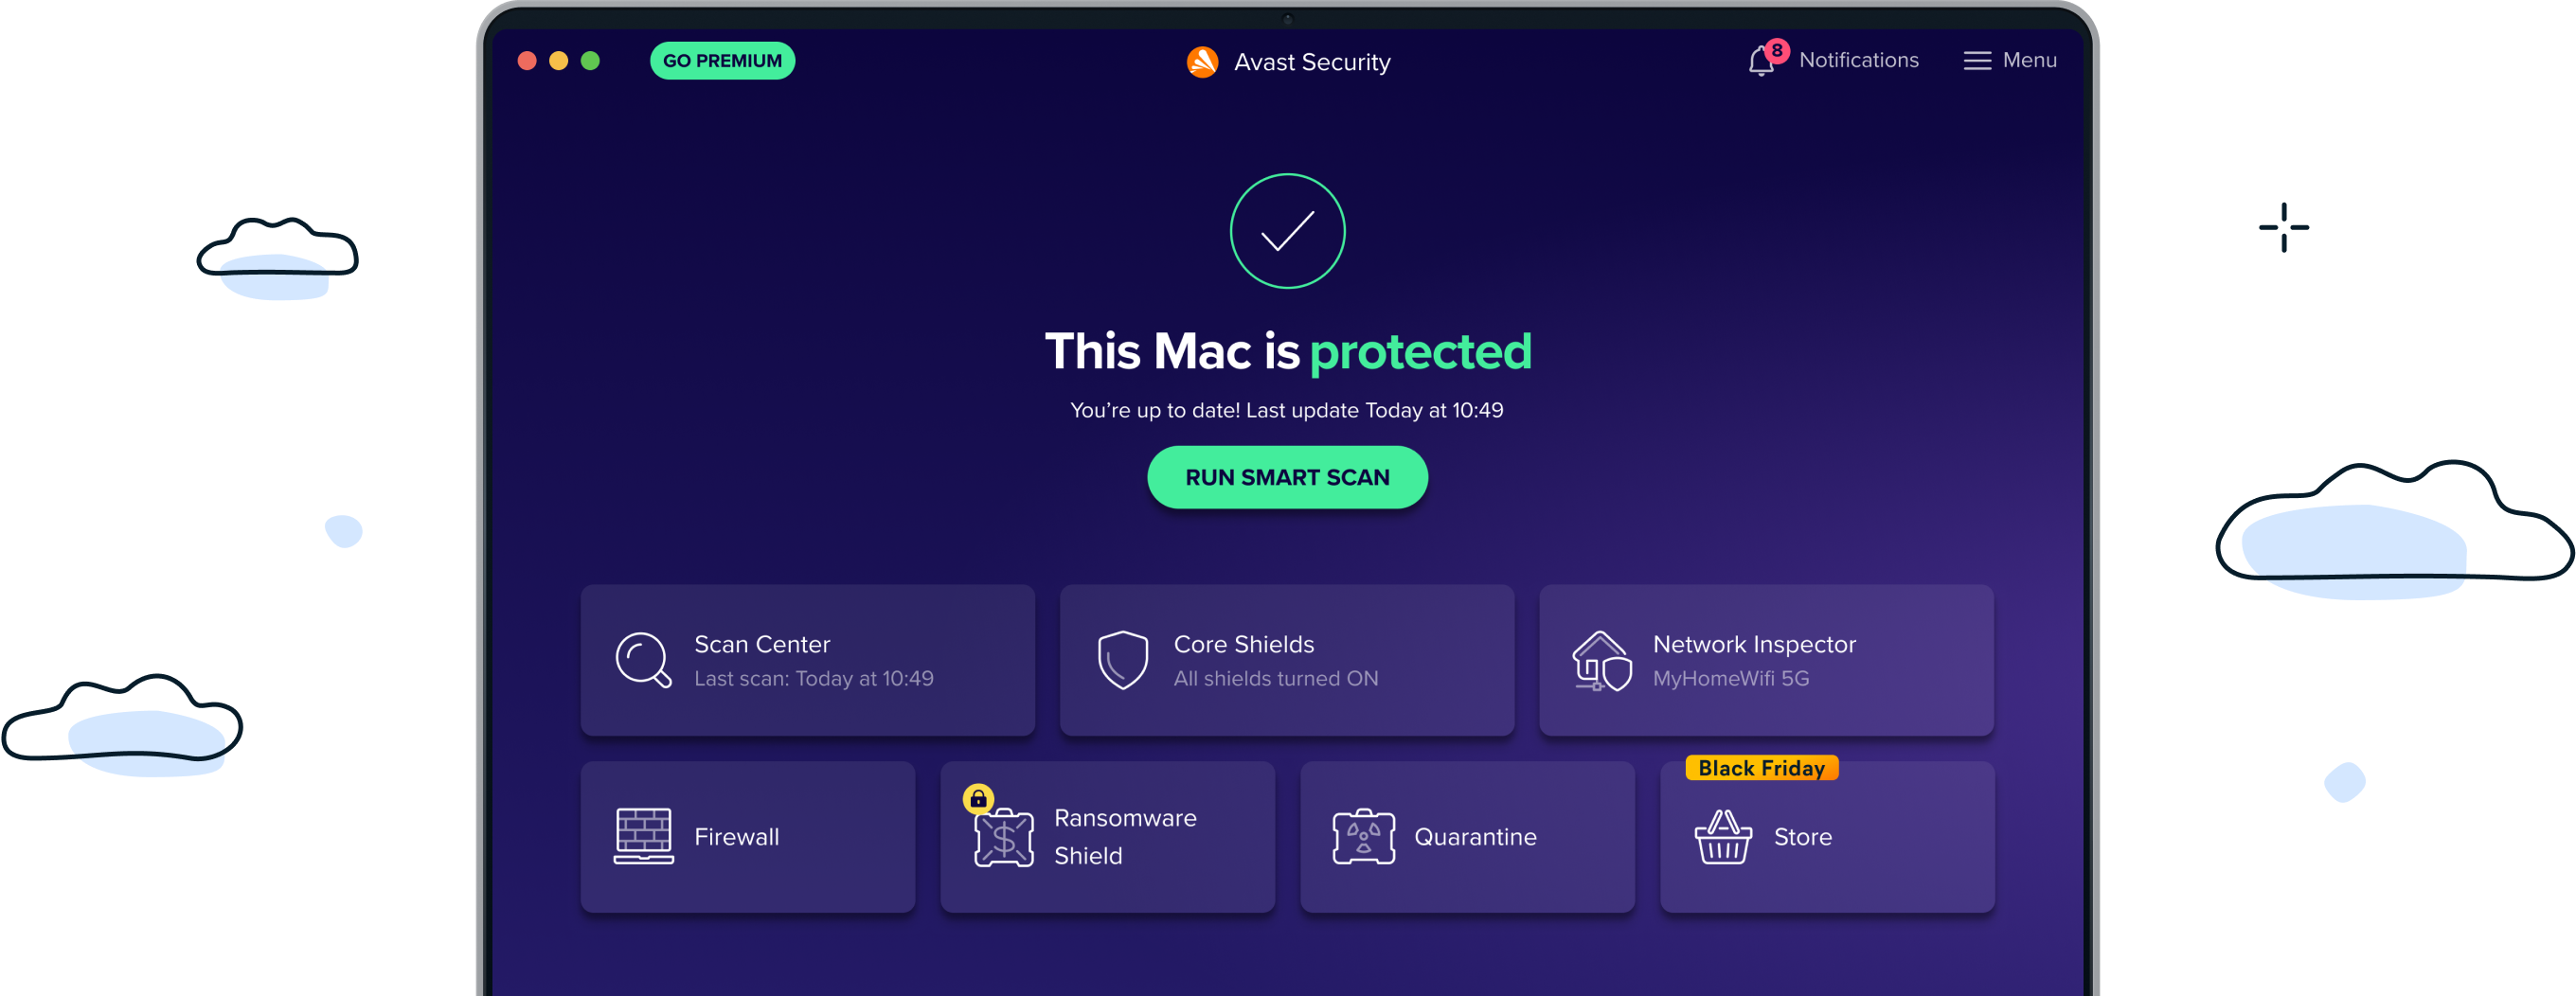 Download Free Antivirus for Mac Free Mac Virus Scan Avast